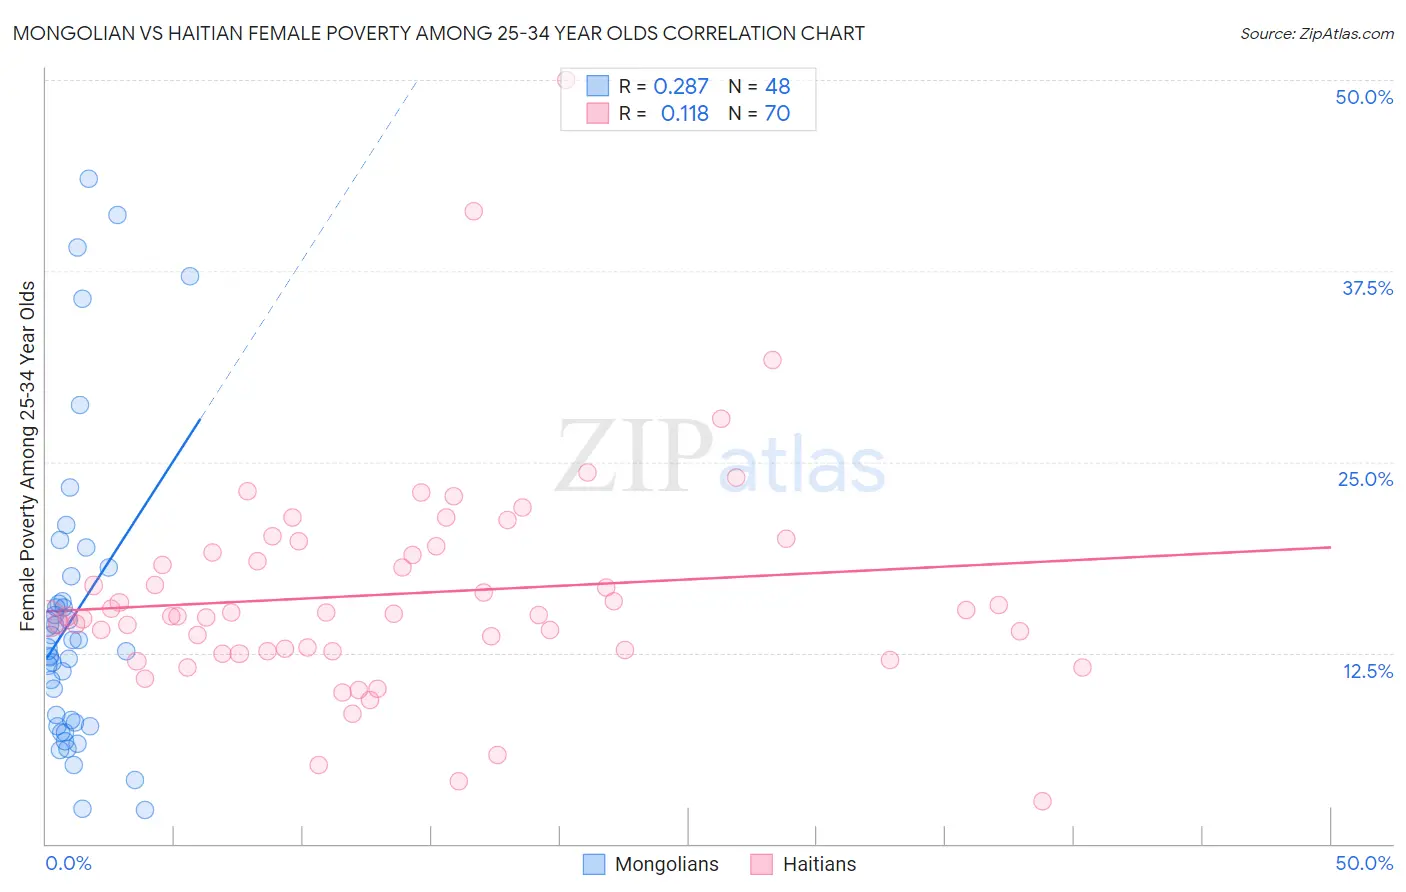 Mongolian vs Haitian Female Poverty Among 25-34 Year Olds